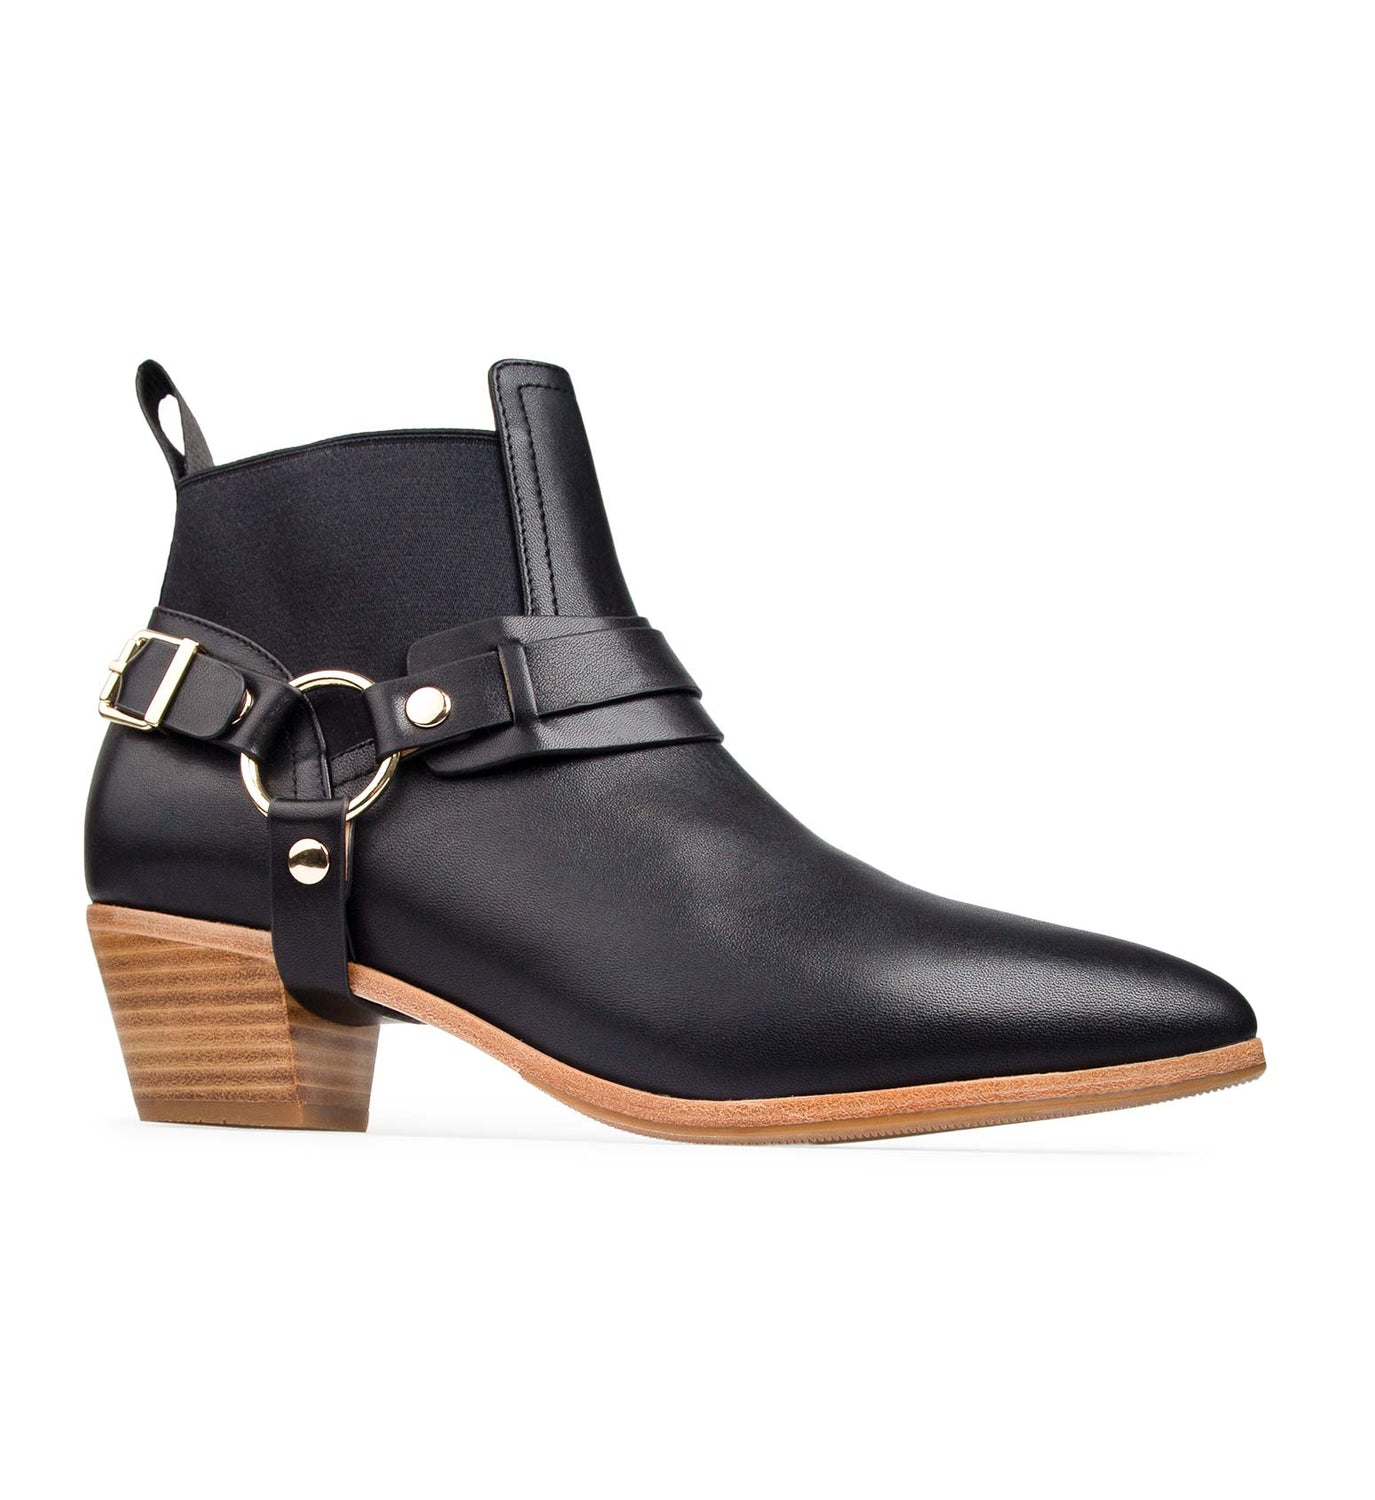 Cuckoo Black Leather Boots | Bared Footwear